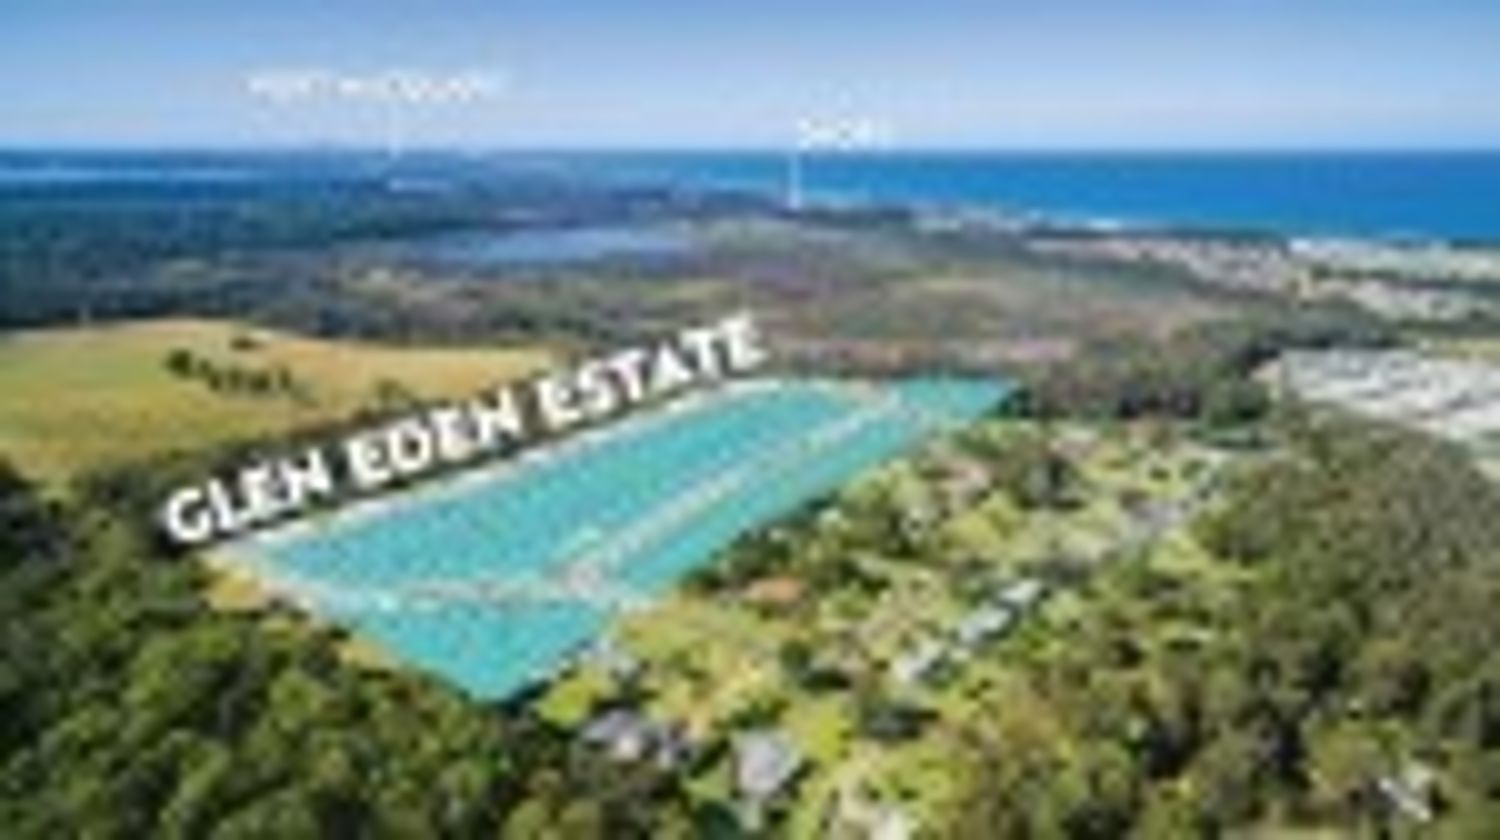 Lot 23 Glen Eden Estate, Lake Cathie NSW 2445, Image 0